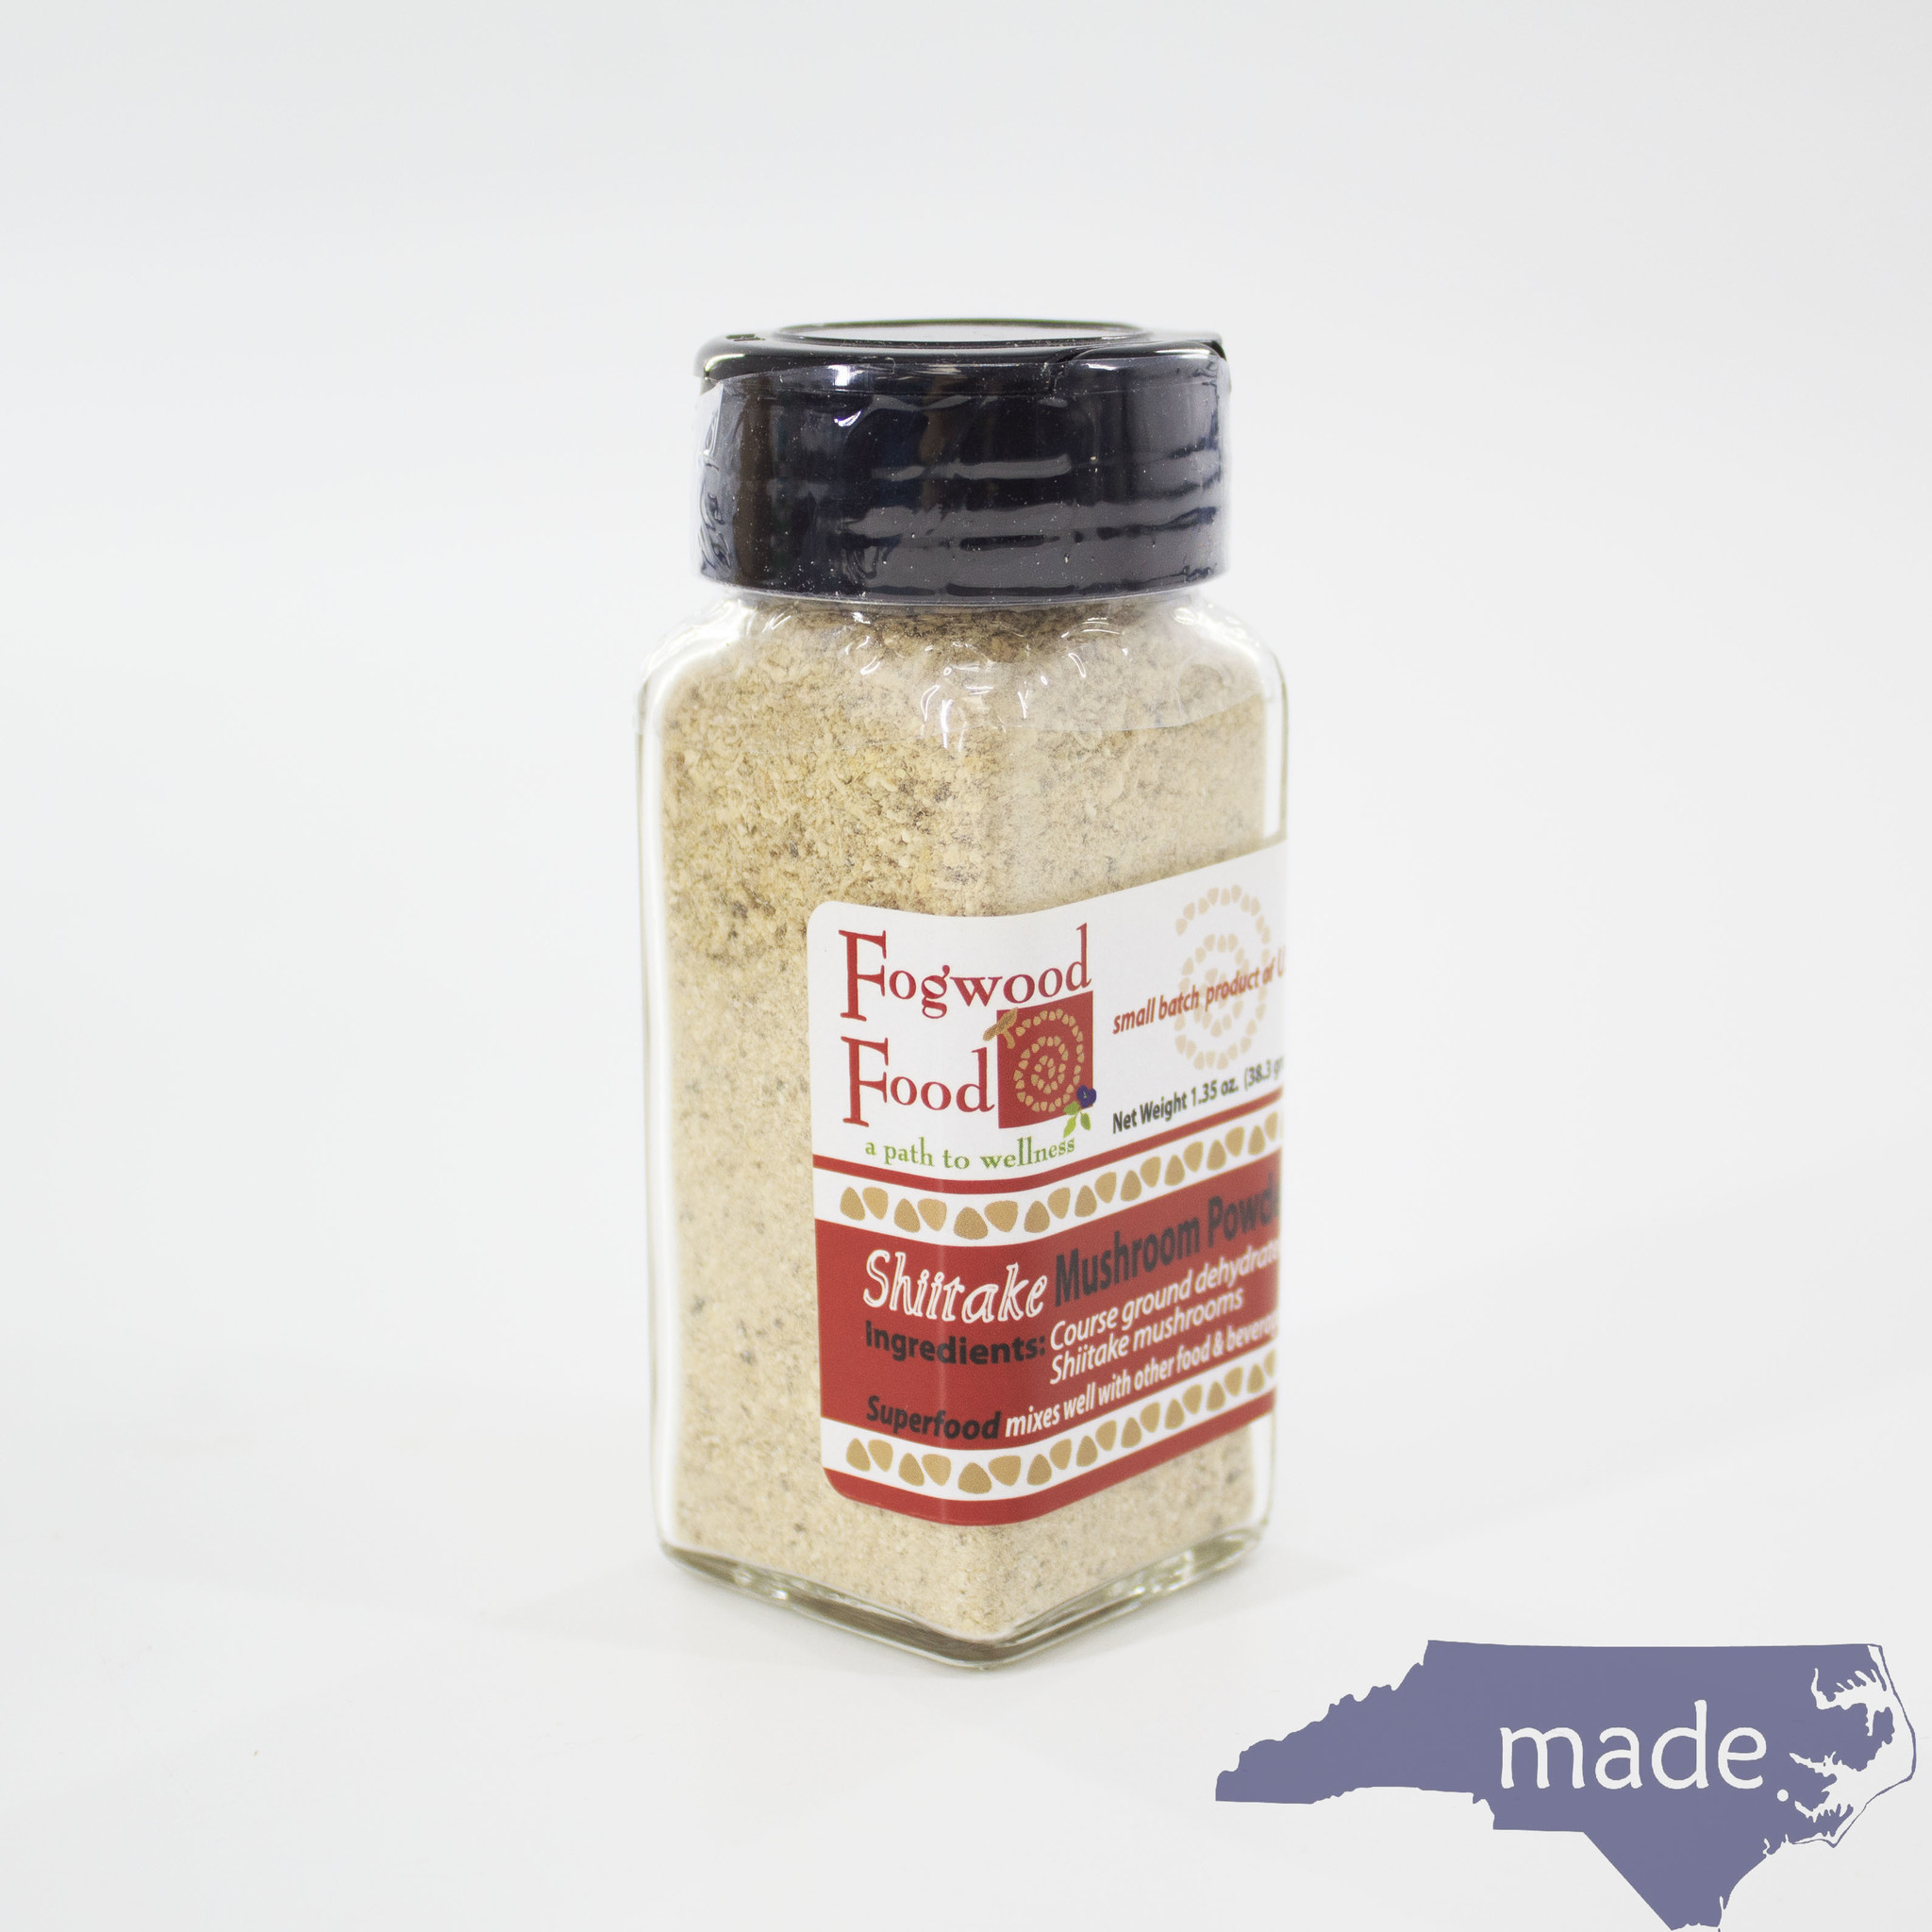 Shiitake Mushroom Powder - Fogwood Food 1.35oz - Made in NC, LLC